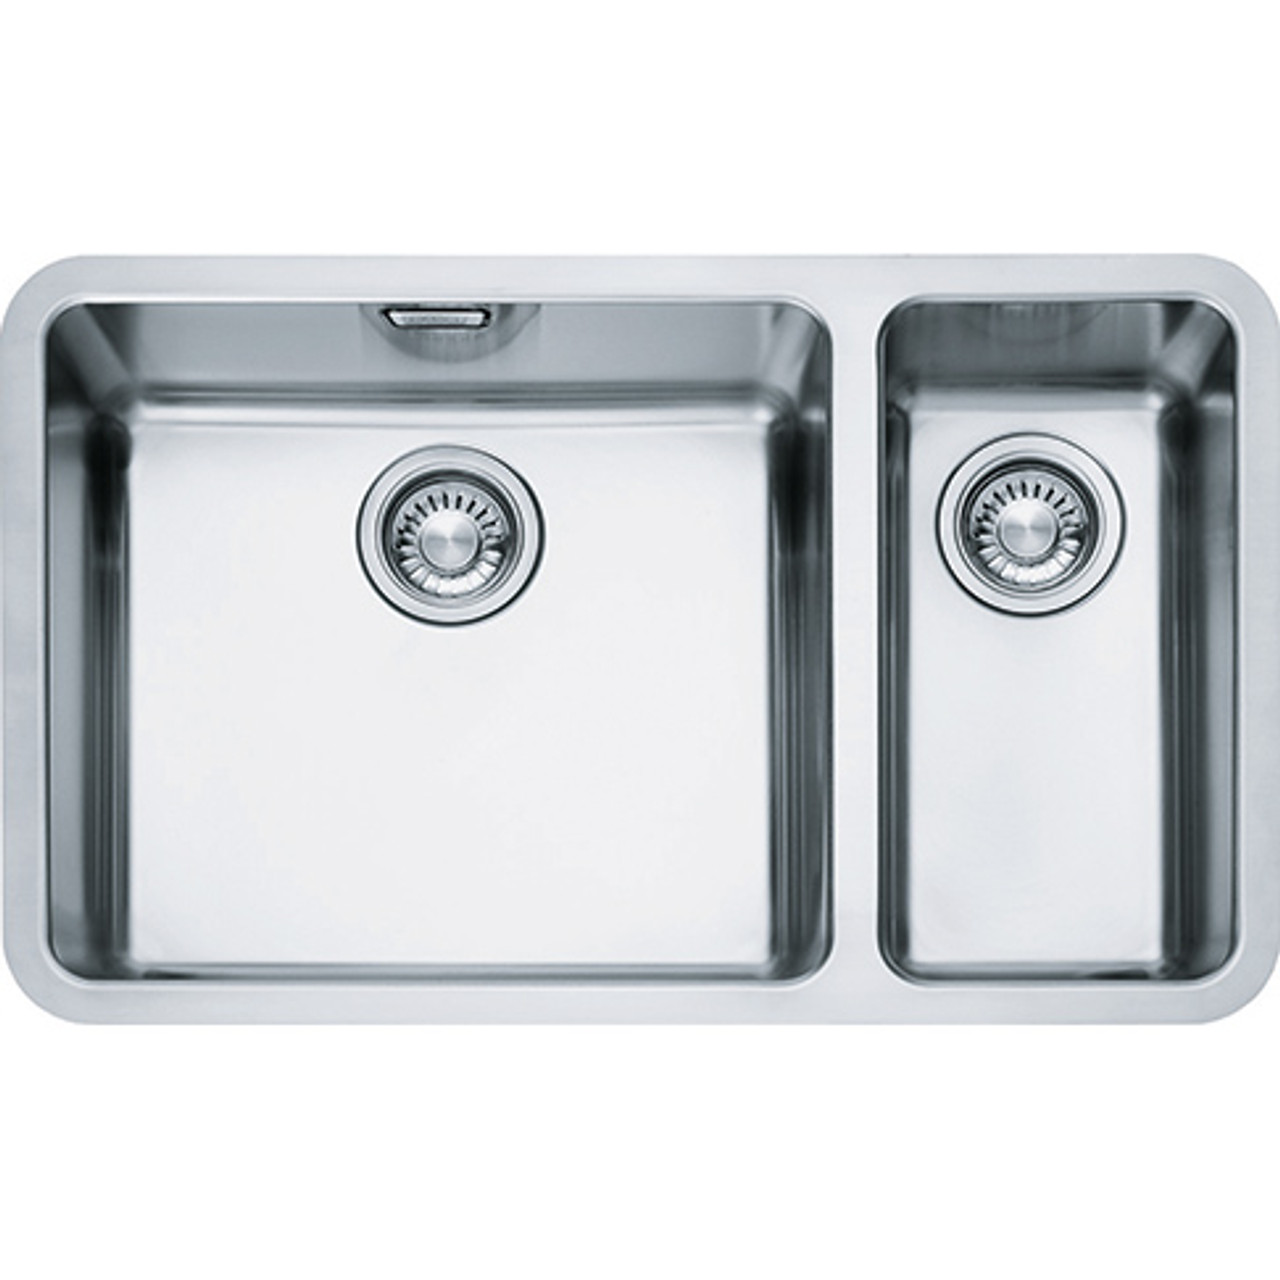 Franke Kubus Kbx160 45 20 Stainless Steel Kitchen Sink